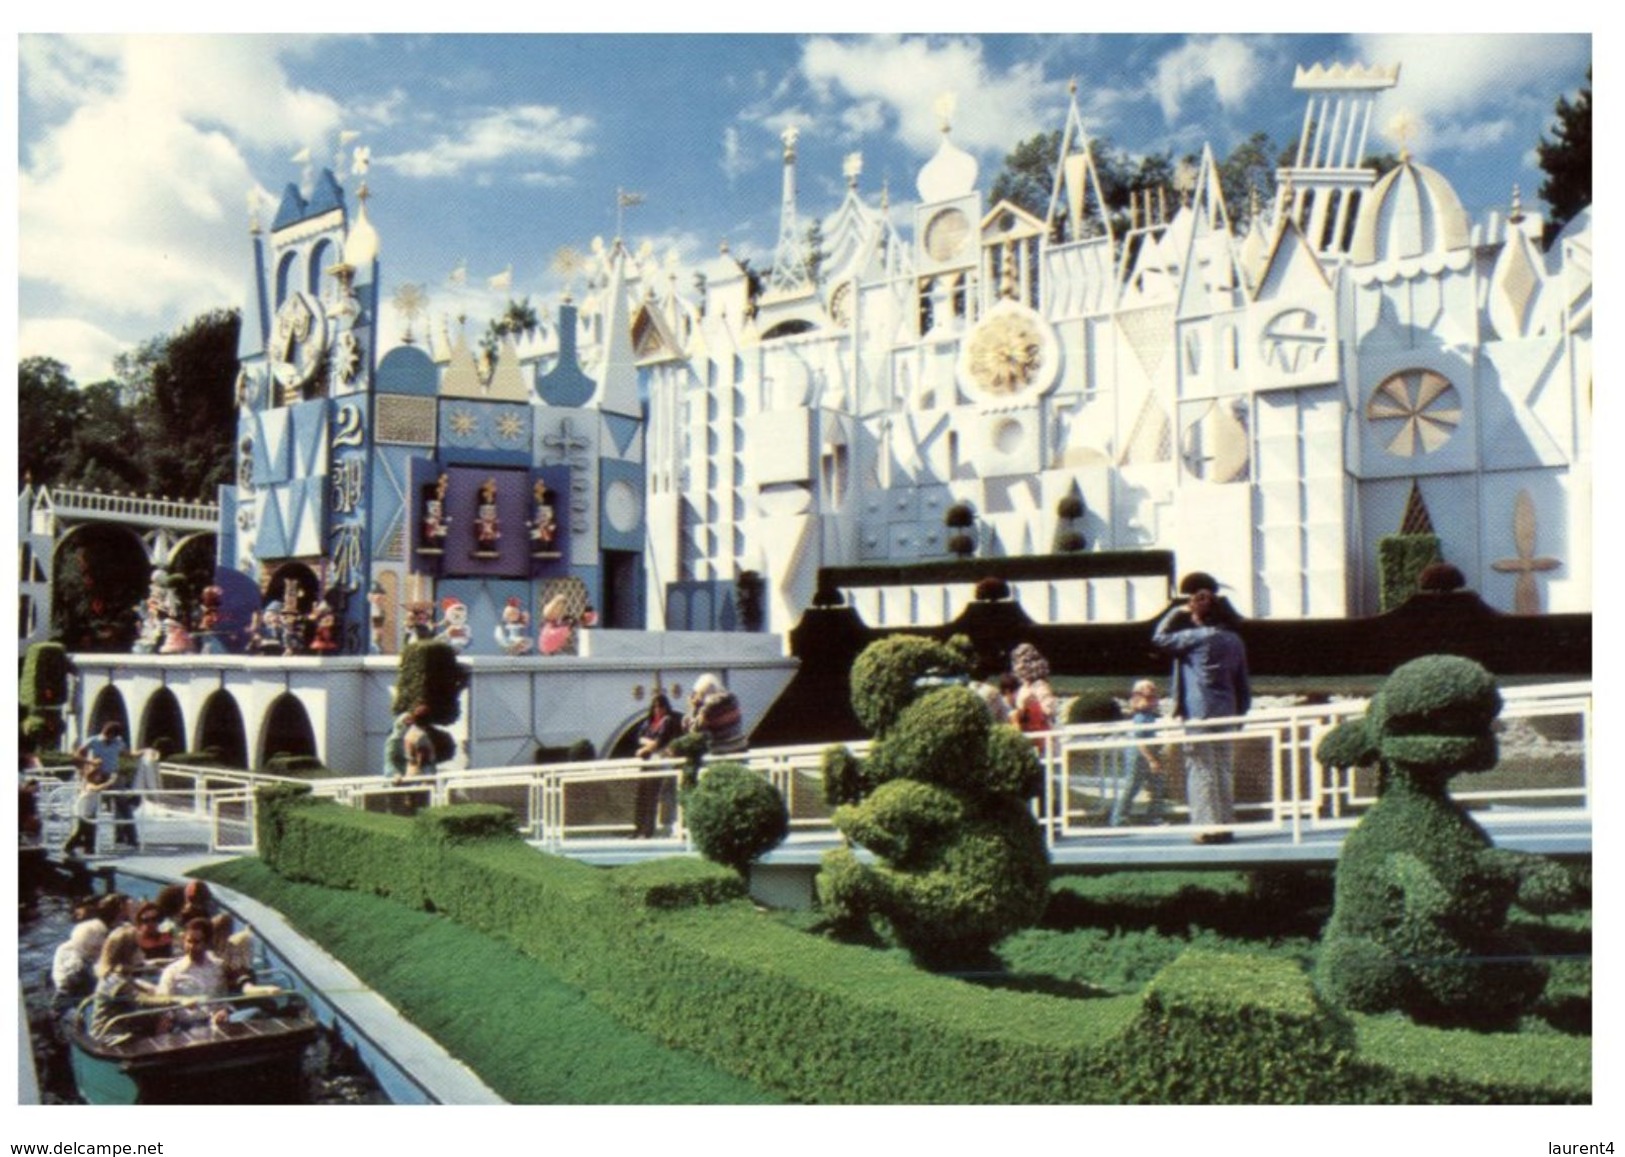 (PF 313) Disneyland Small World - Disneyland